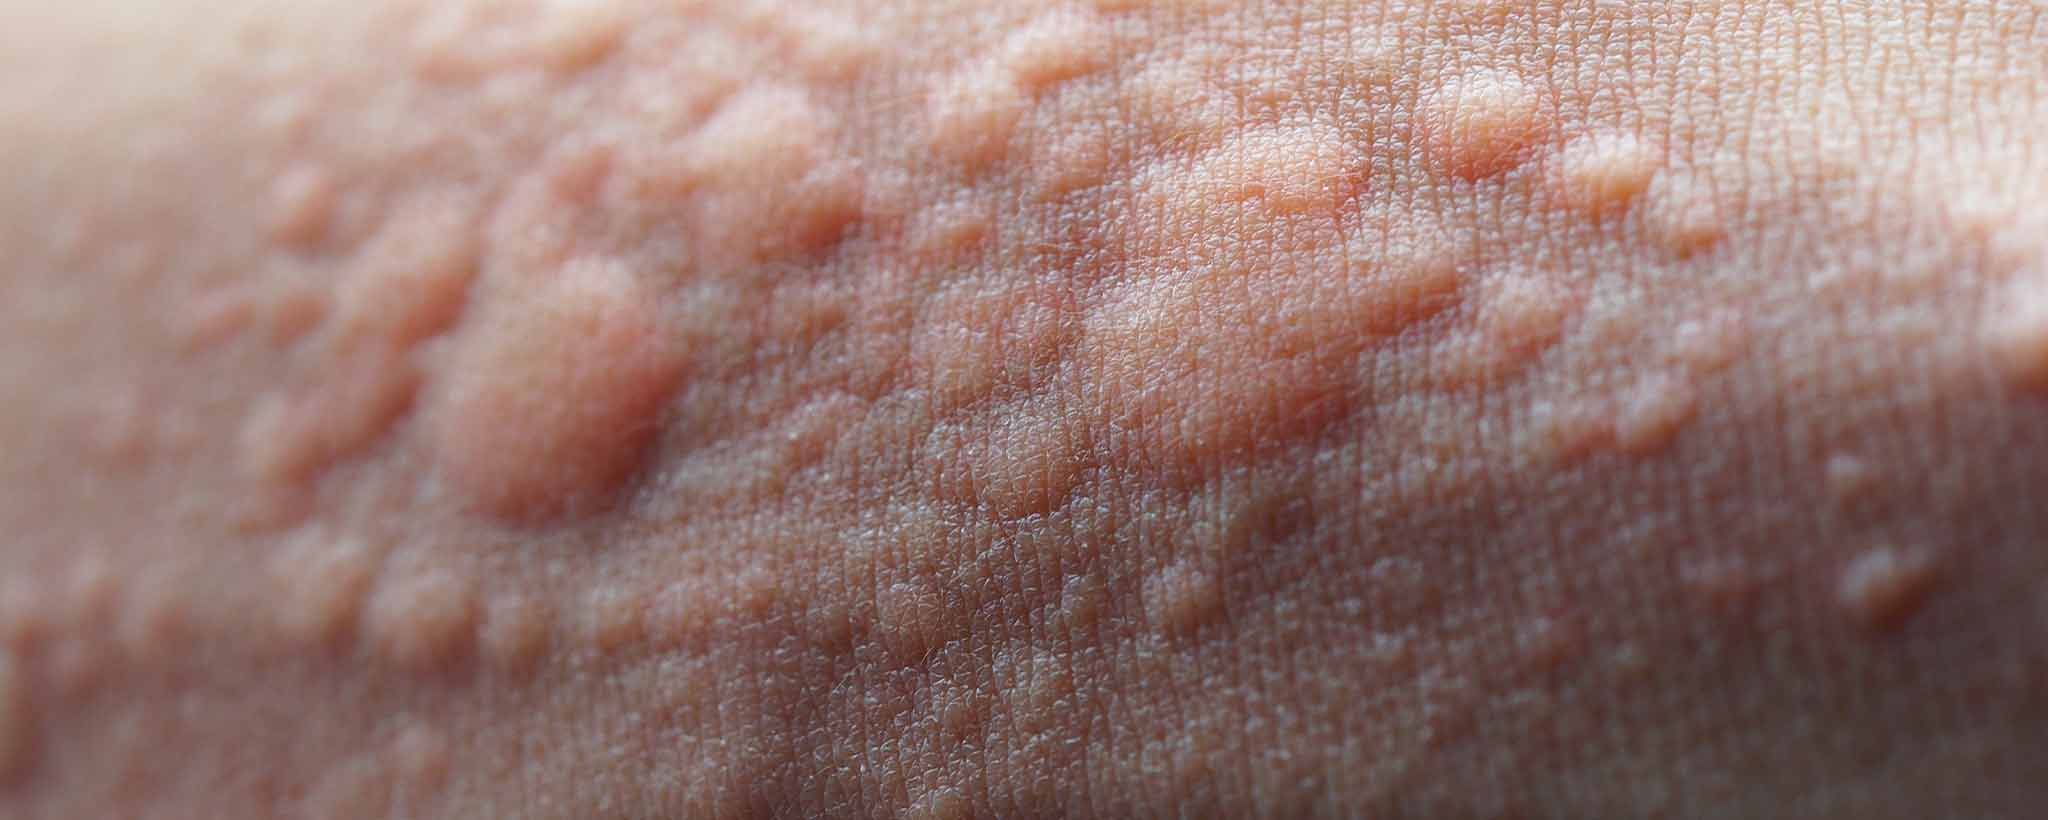 'Skin Eruptions Signal Underlying Disorders'